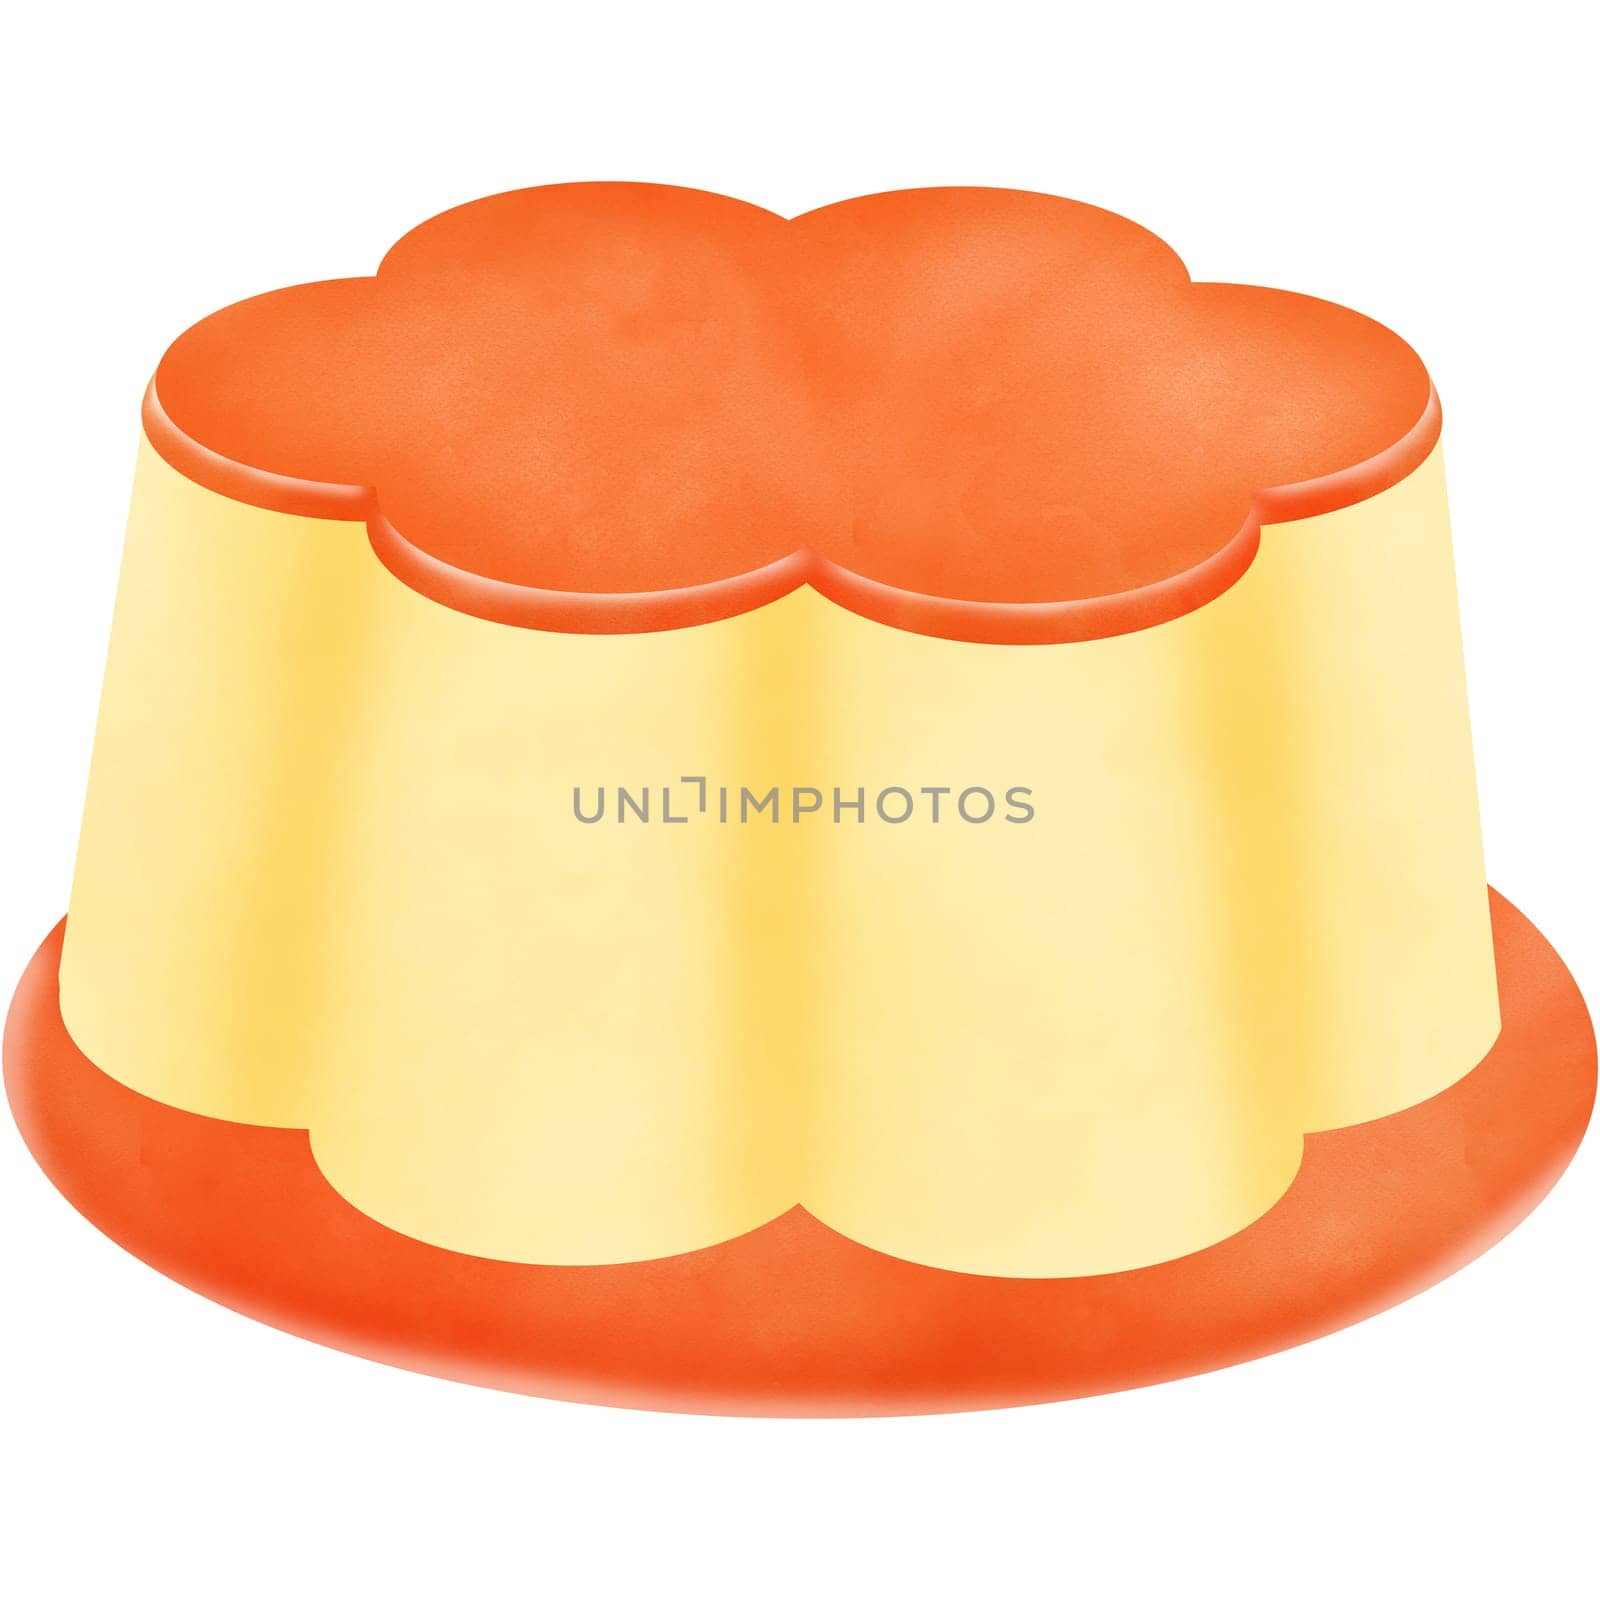 Illustration of a custard pudding cake isolated on white background by iamnoonmai